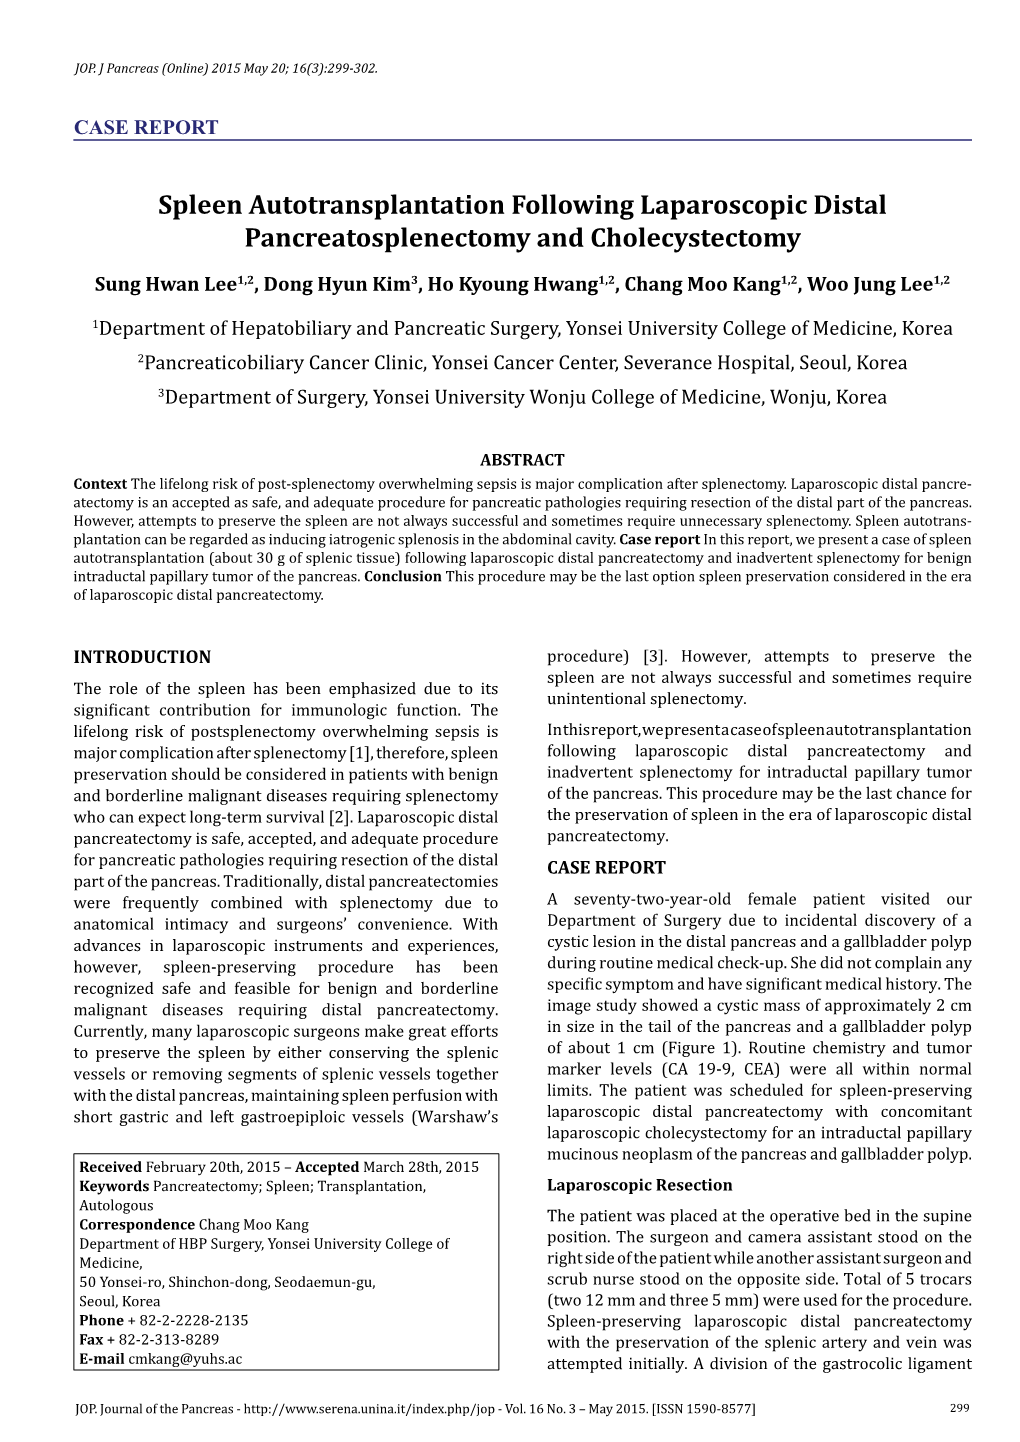 Spleen Autotransplantation Following Laparoscopic Distal Pancreatosplenectomy and Cholecystectomy